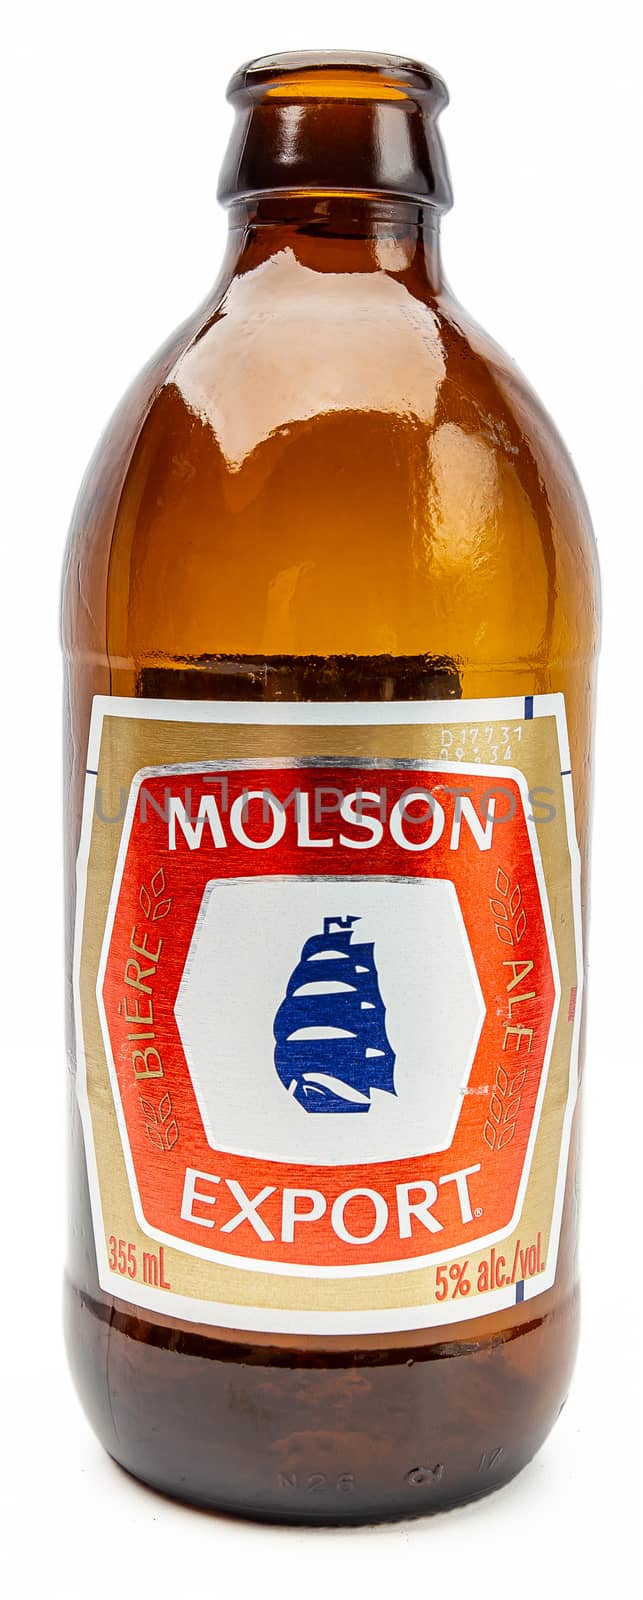 Vintage Molson Export bottle by mypstudio